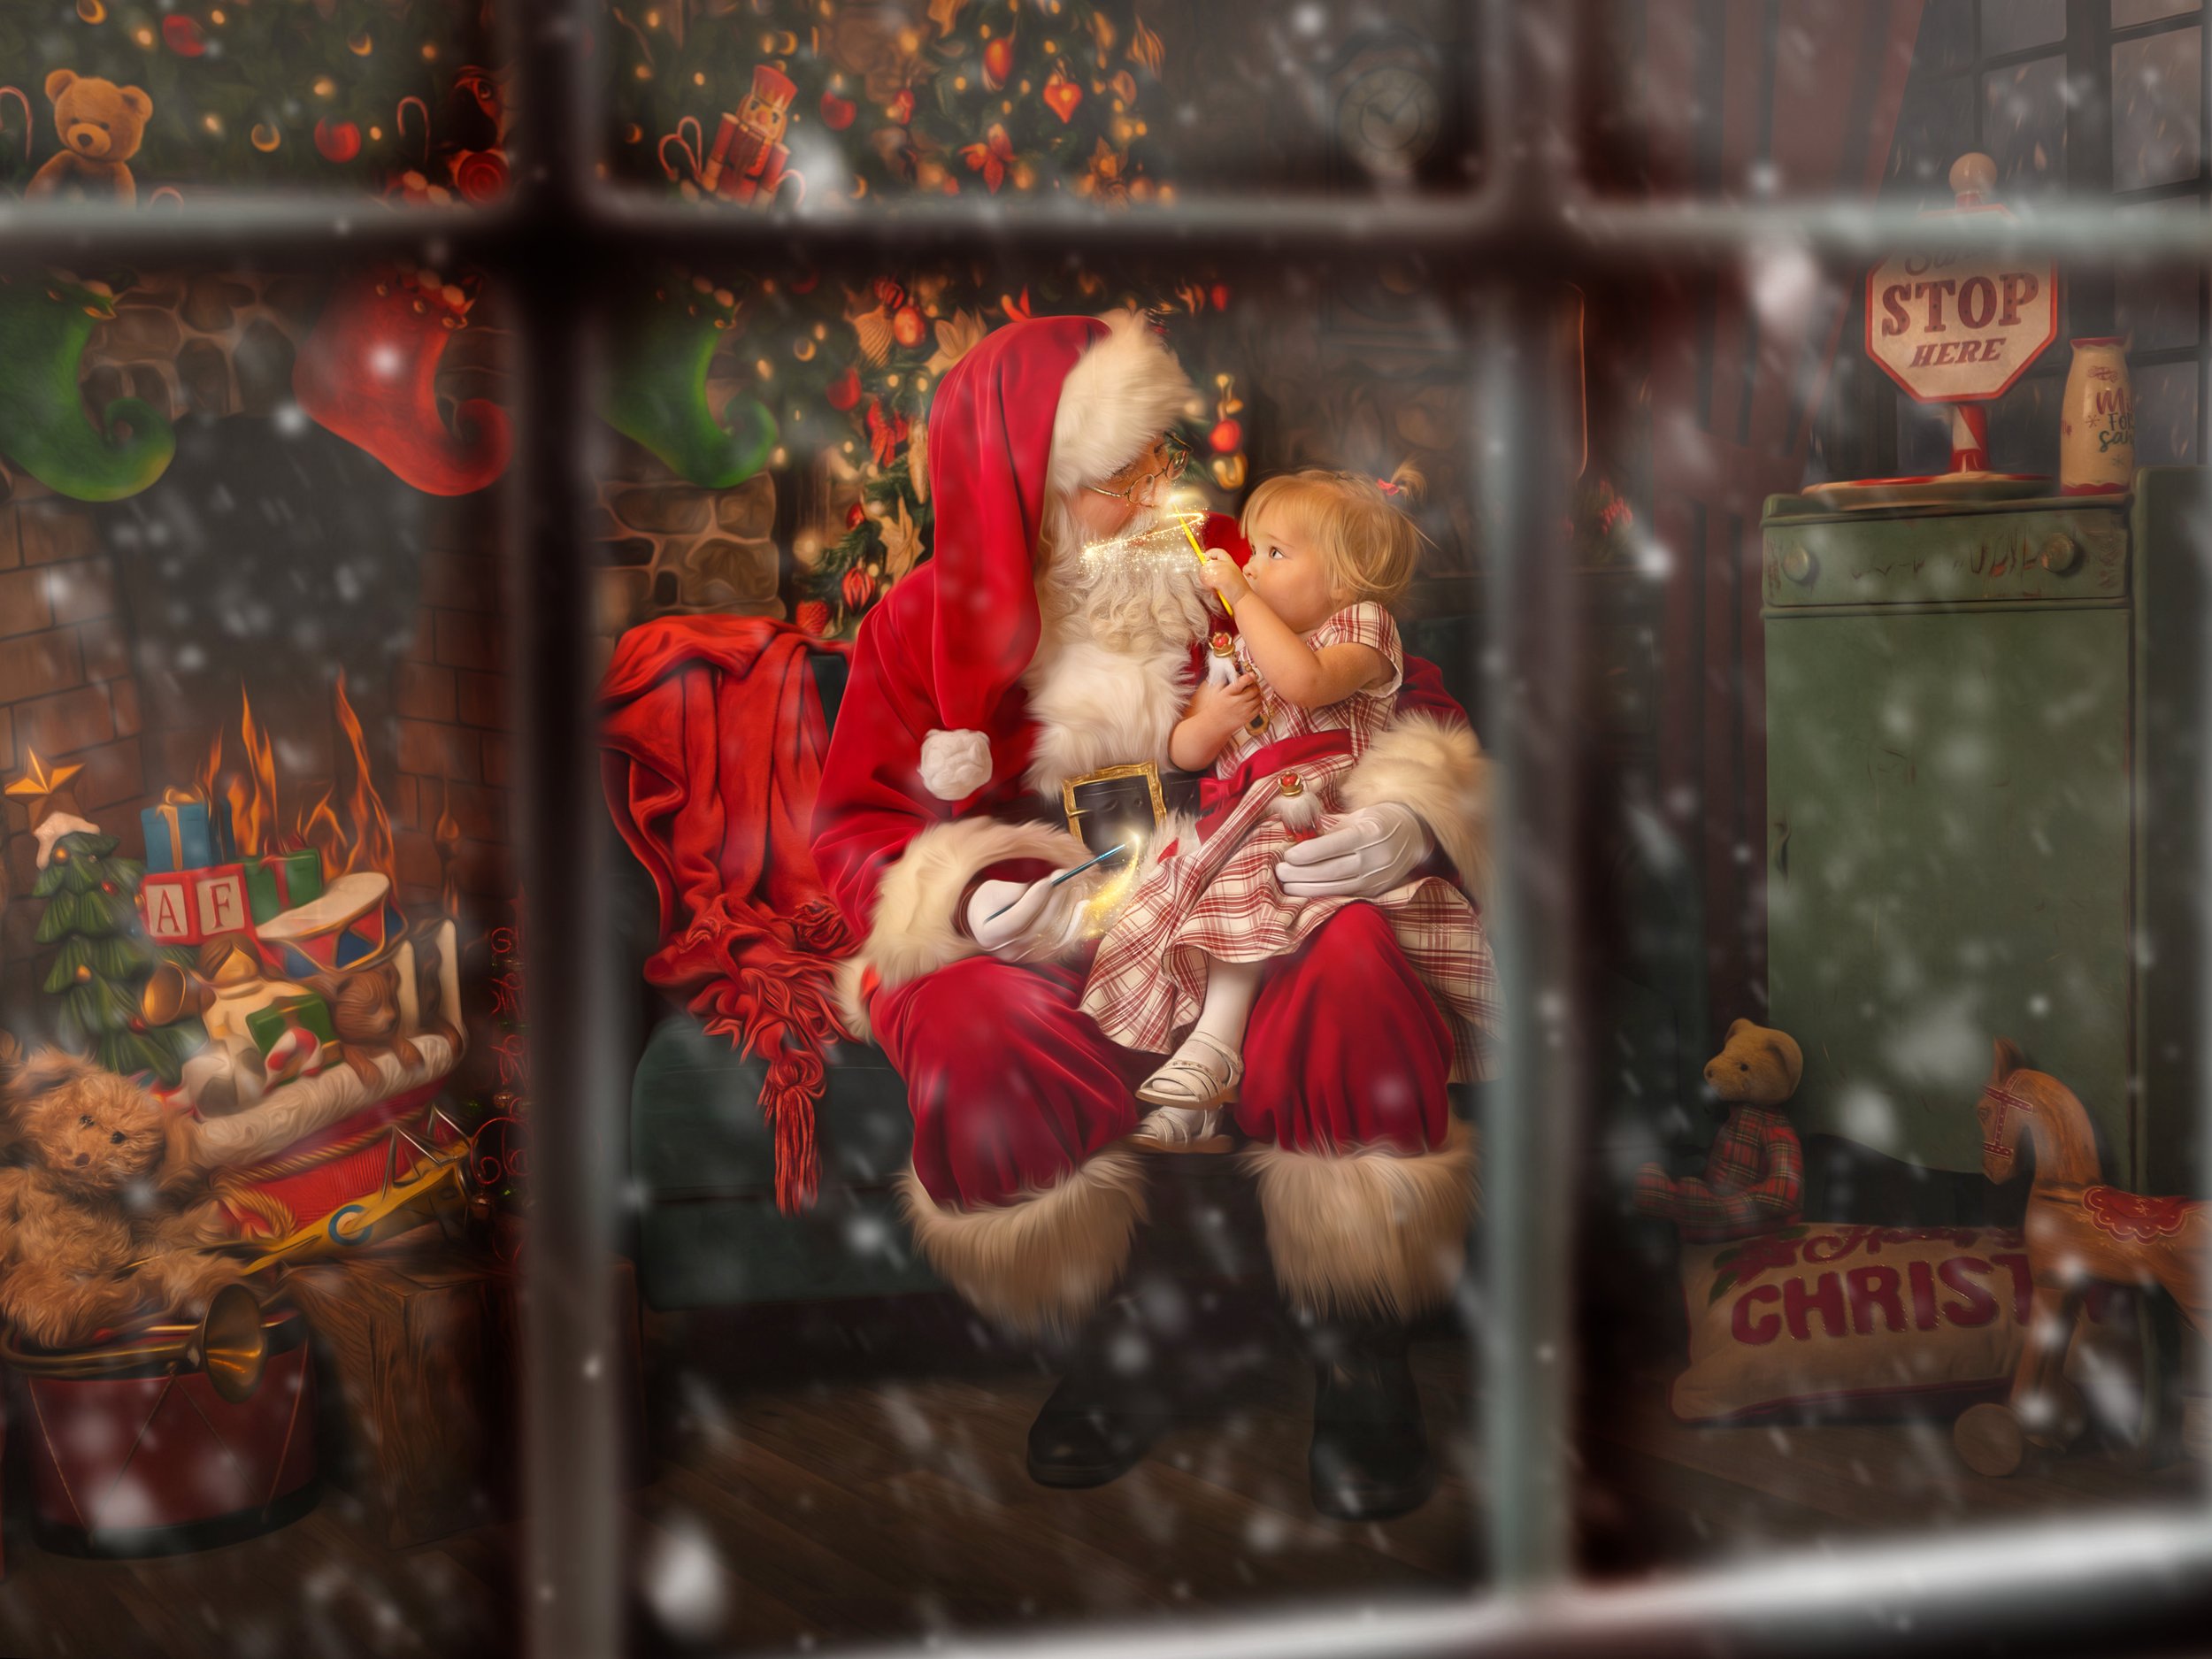 gracie_Christmas_window.jpg